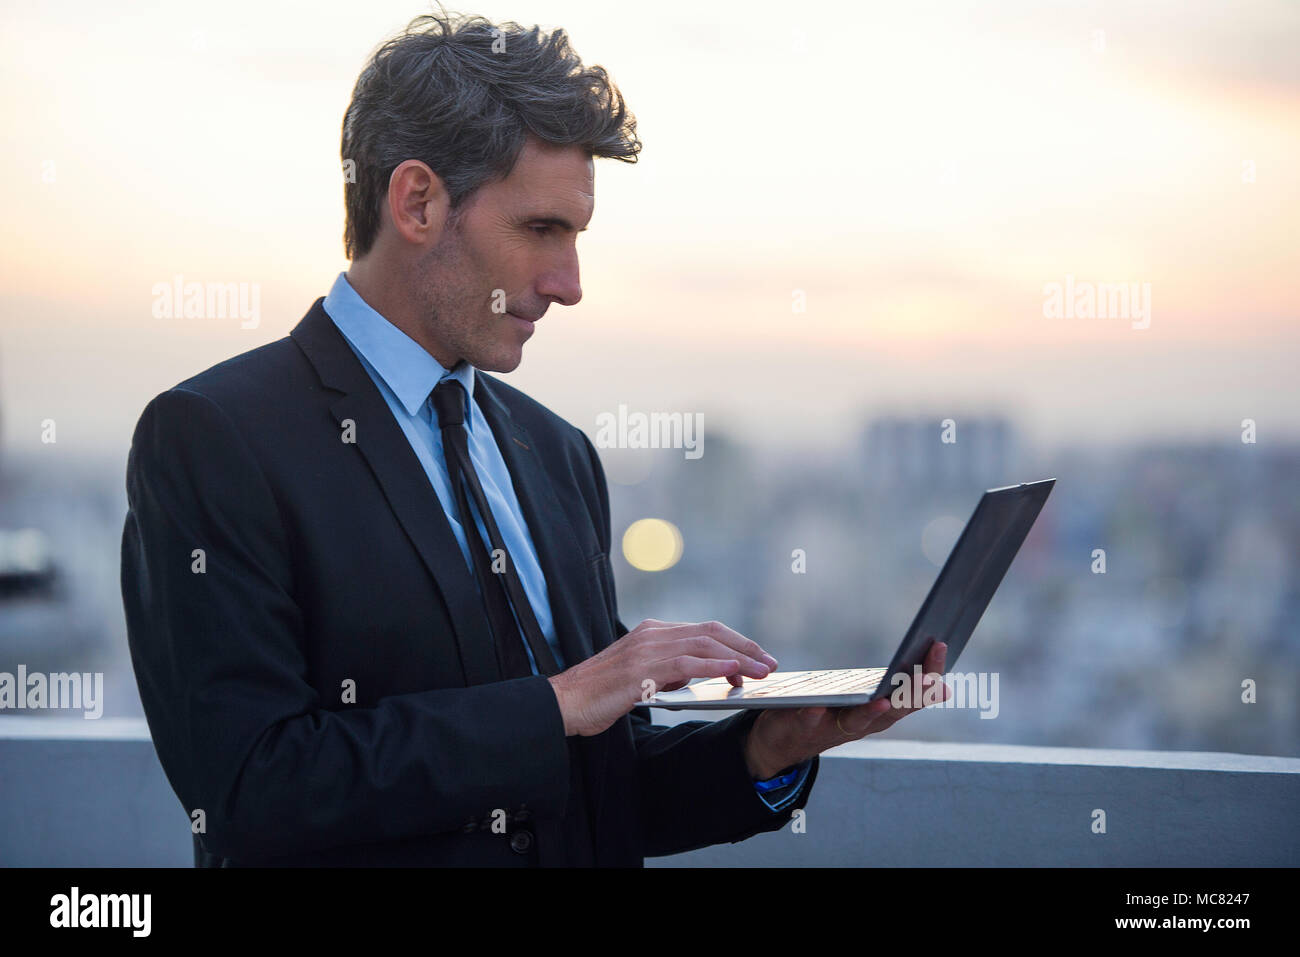 Businessman using laptop on rooftop Banque D'Images